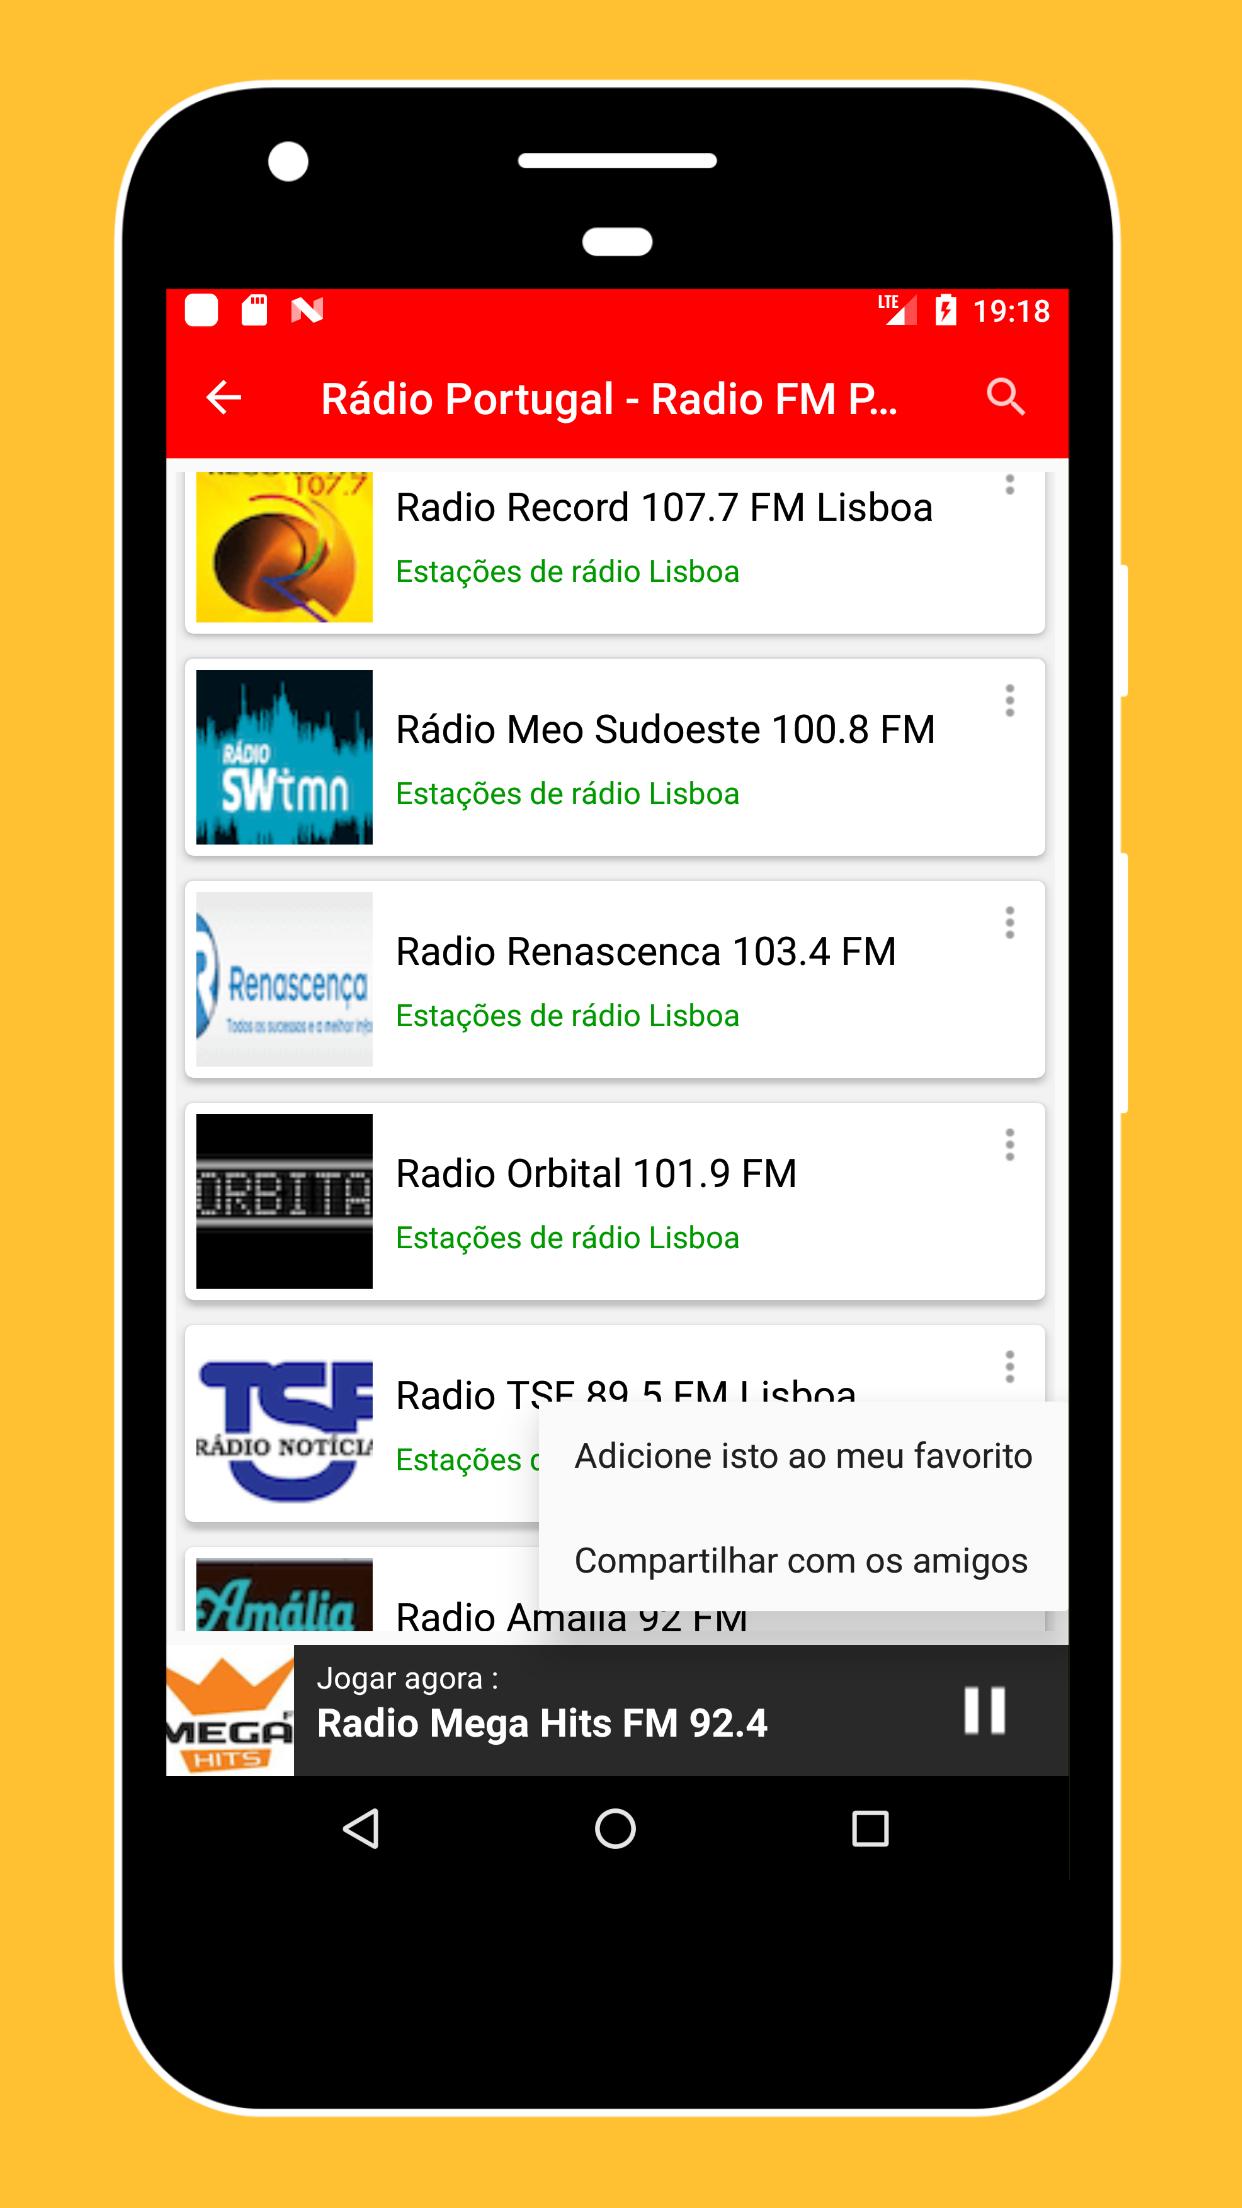 Rádio Portugal - Radio FM Portugal / Online Rádios for Android - APK  Download